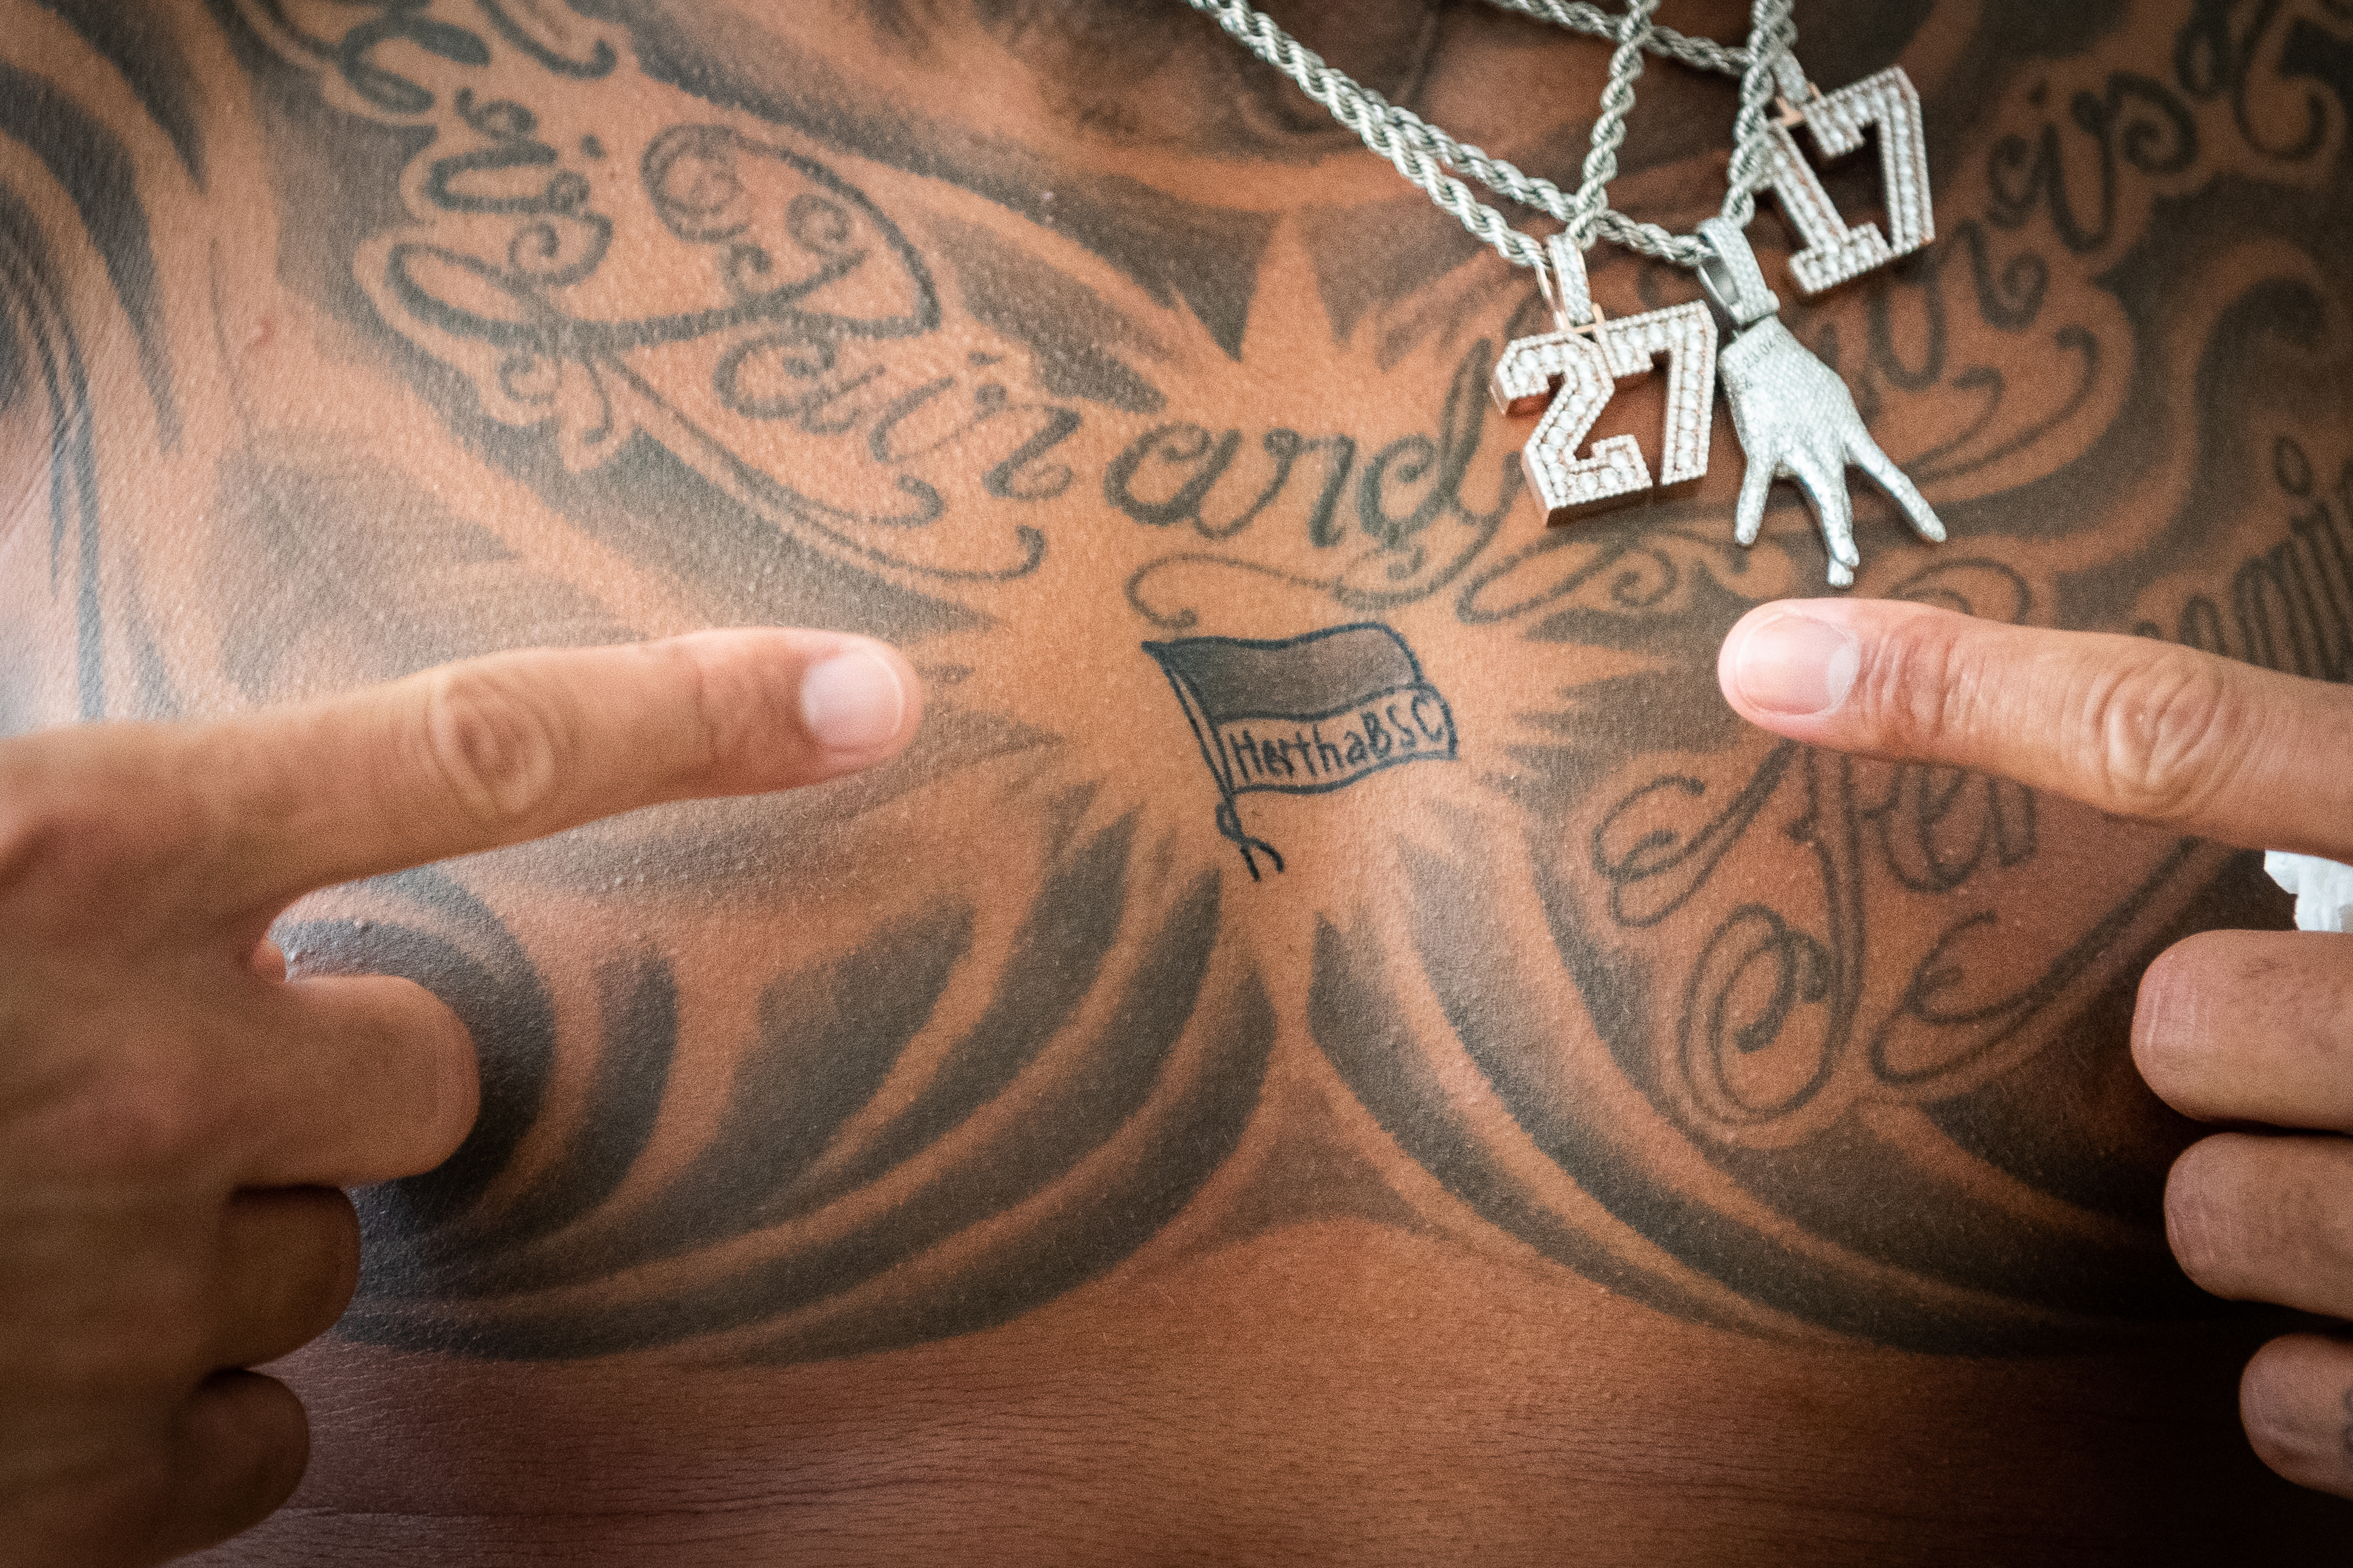 Prince Boateng señala su tatuaje en el pecho.